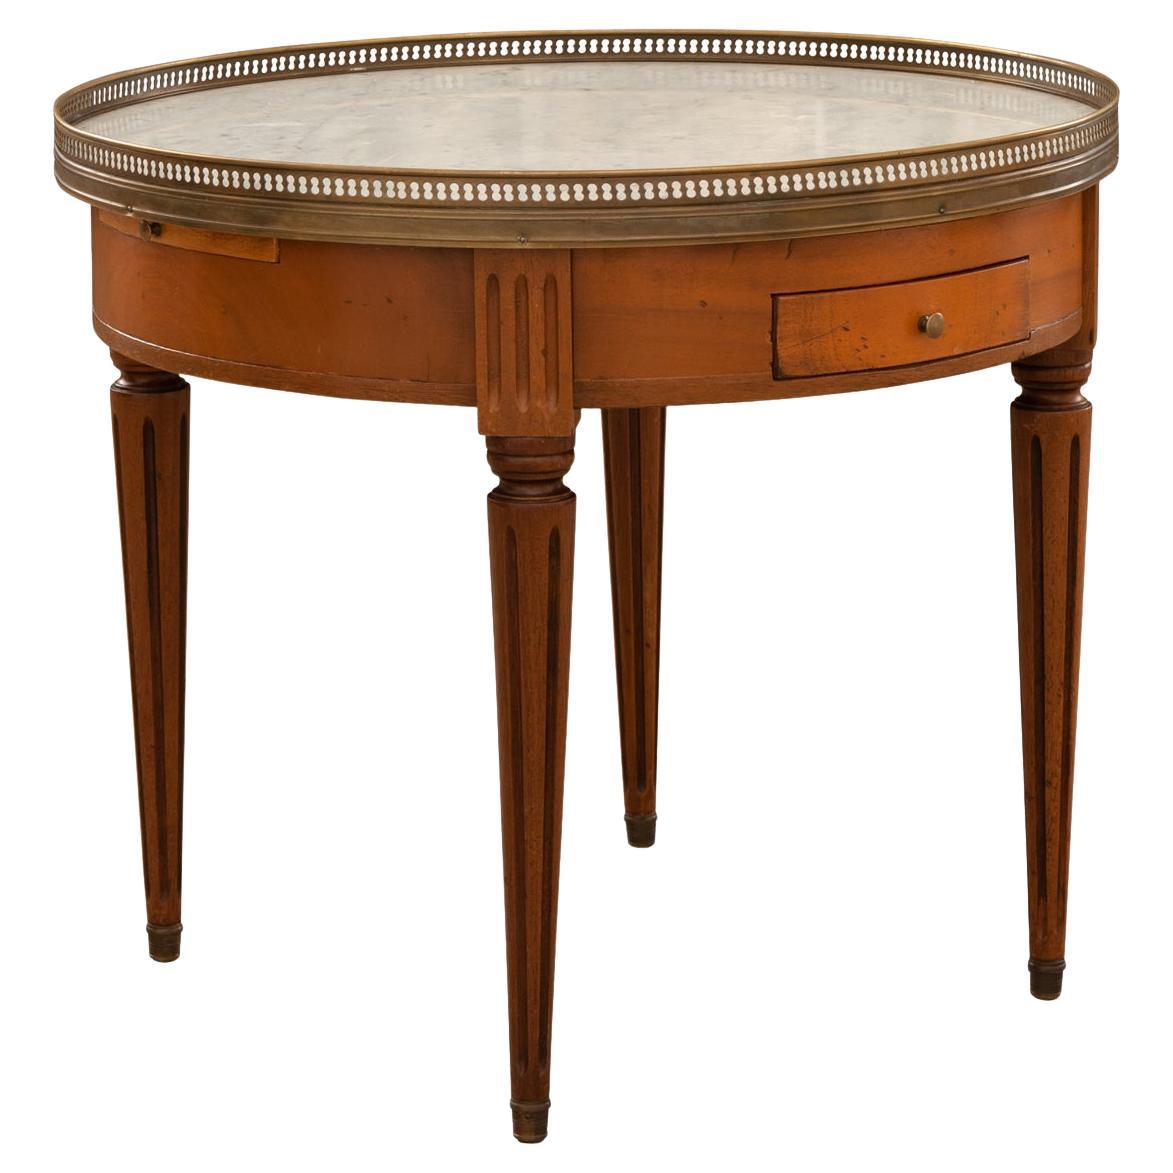 Table Bouillotte Guéridon de style Louis XVI français